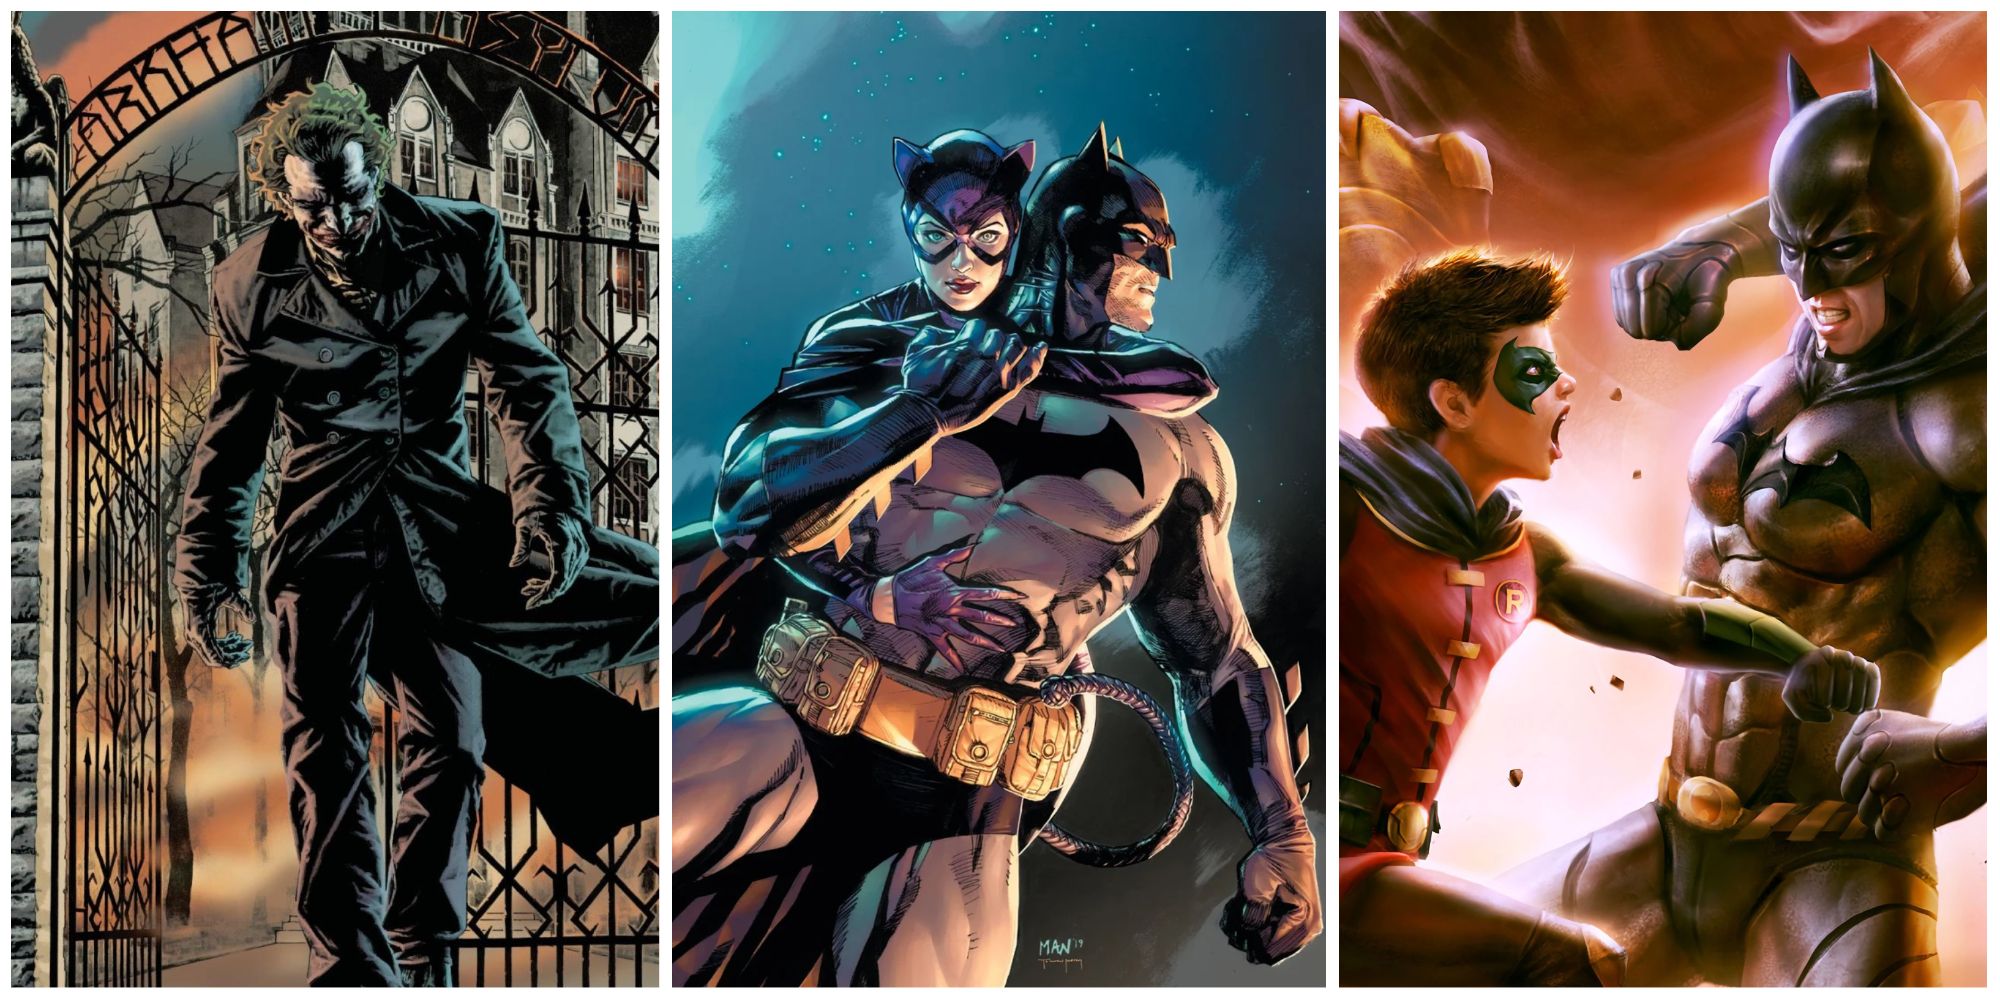 Split image Joker leaving Arkham Asylum - Batman and Catwoman - Batman fighting Robin